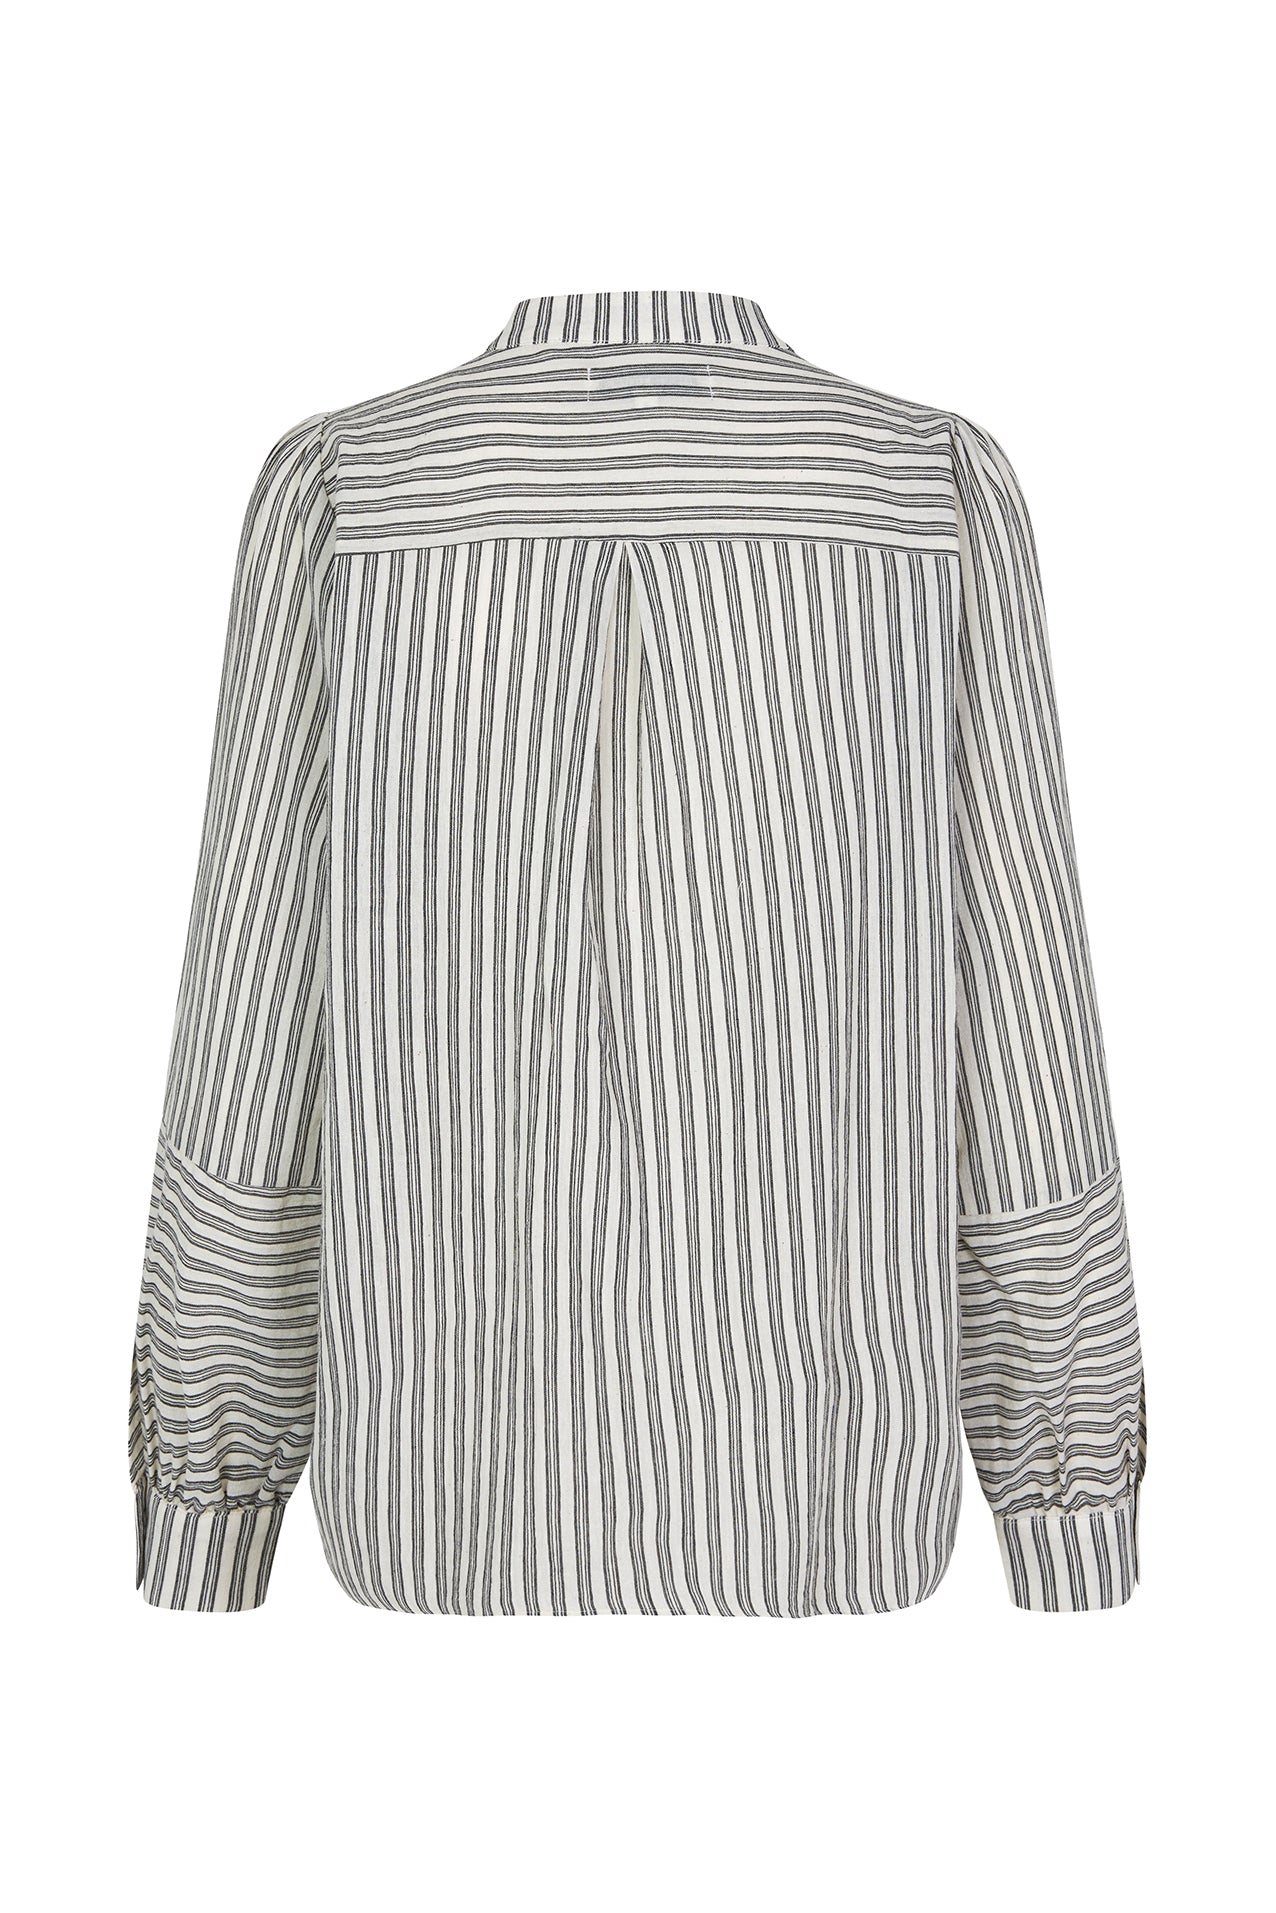 Lollys Laundry LinaLL Shirt LS Shirt 80 Stripe